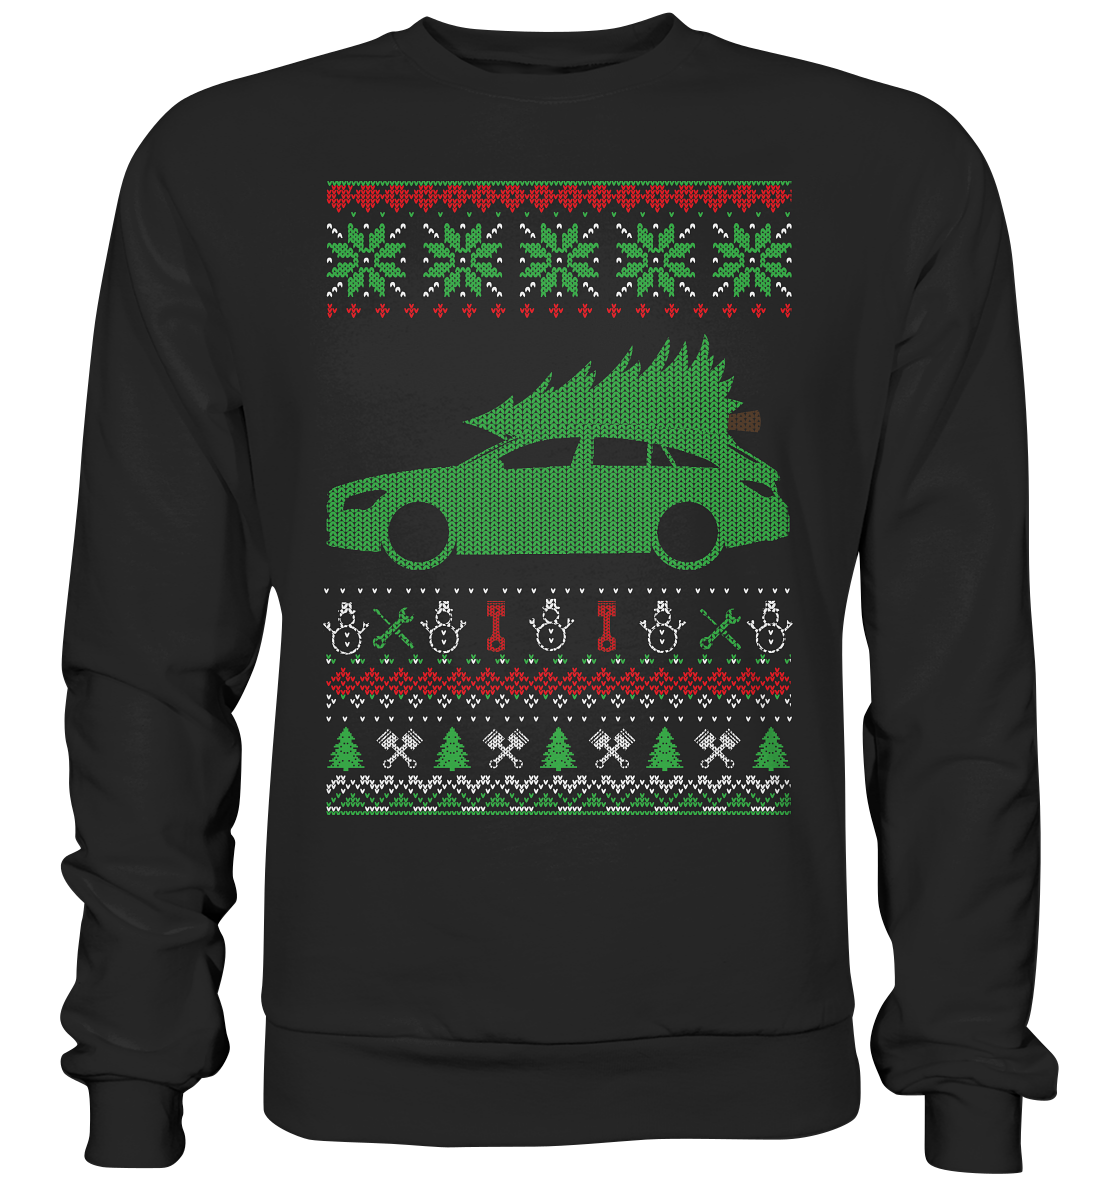 CODUGLY_MGKX117 - Premium Sweatshirt